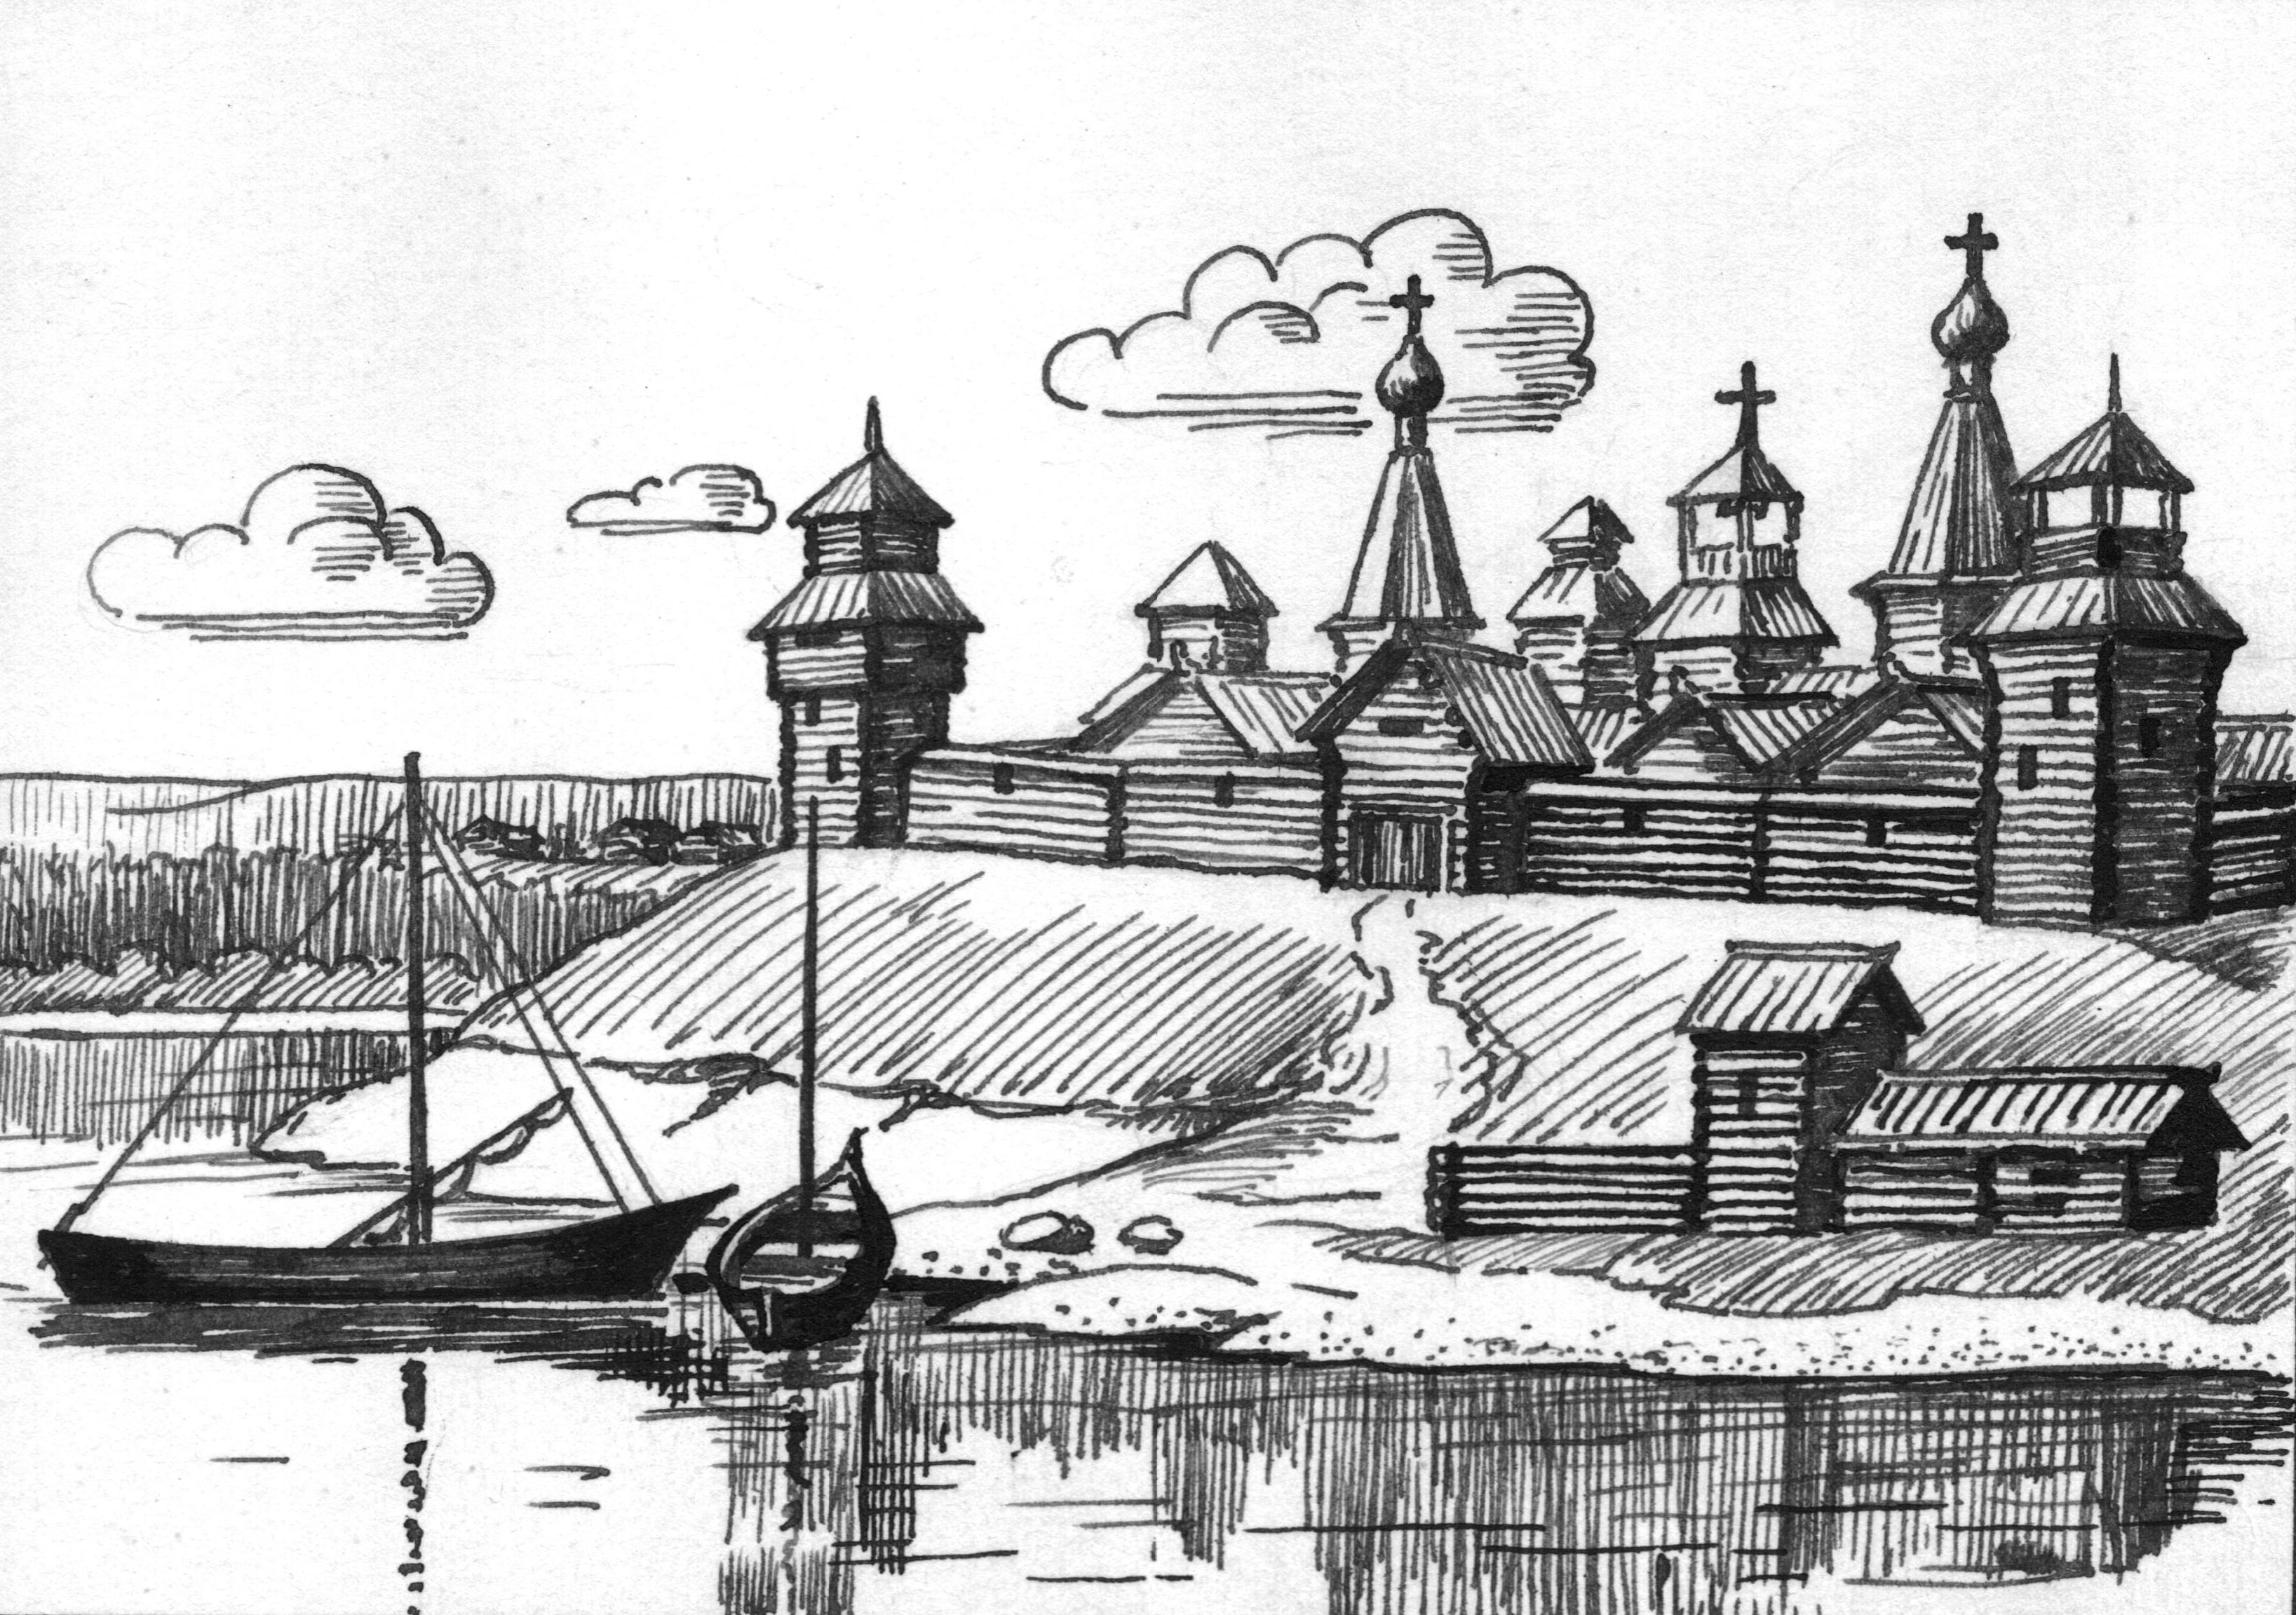 Еренский городок 17-го века по версии художника С.Н. Худякова